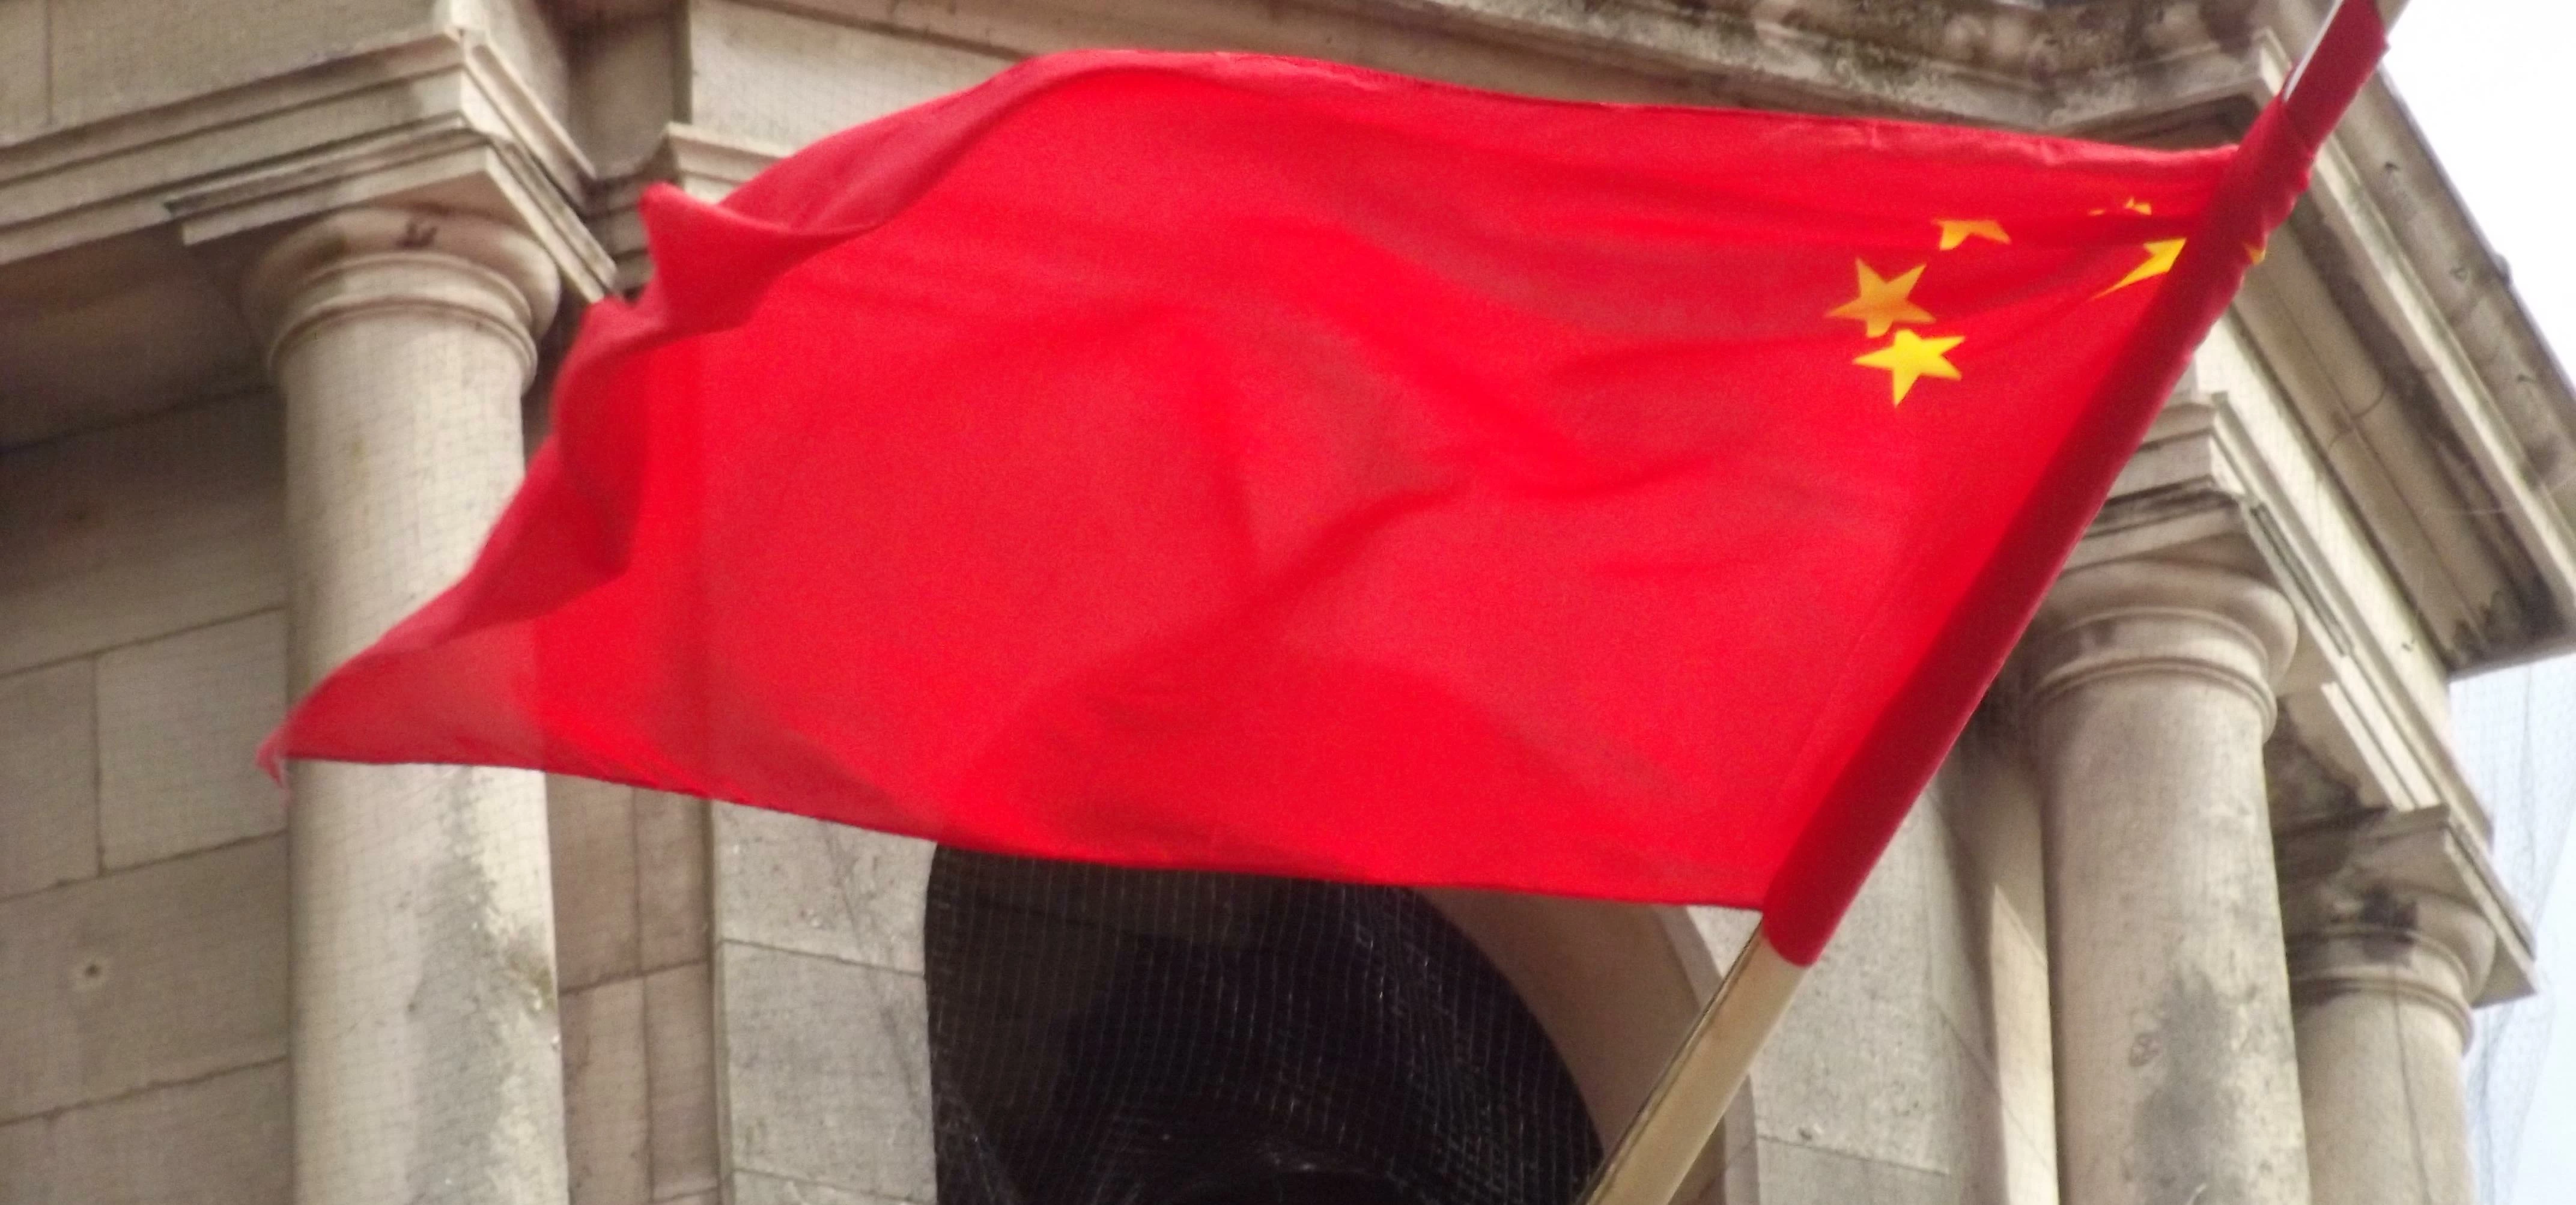 Chinese flag - 130 Colmore Row, Birmingham